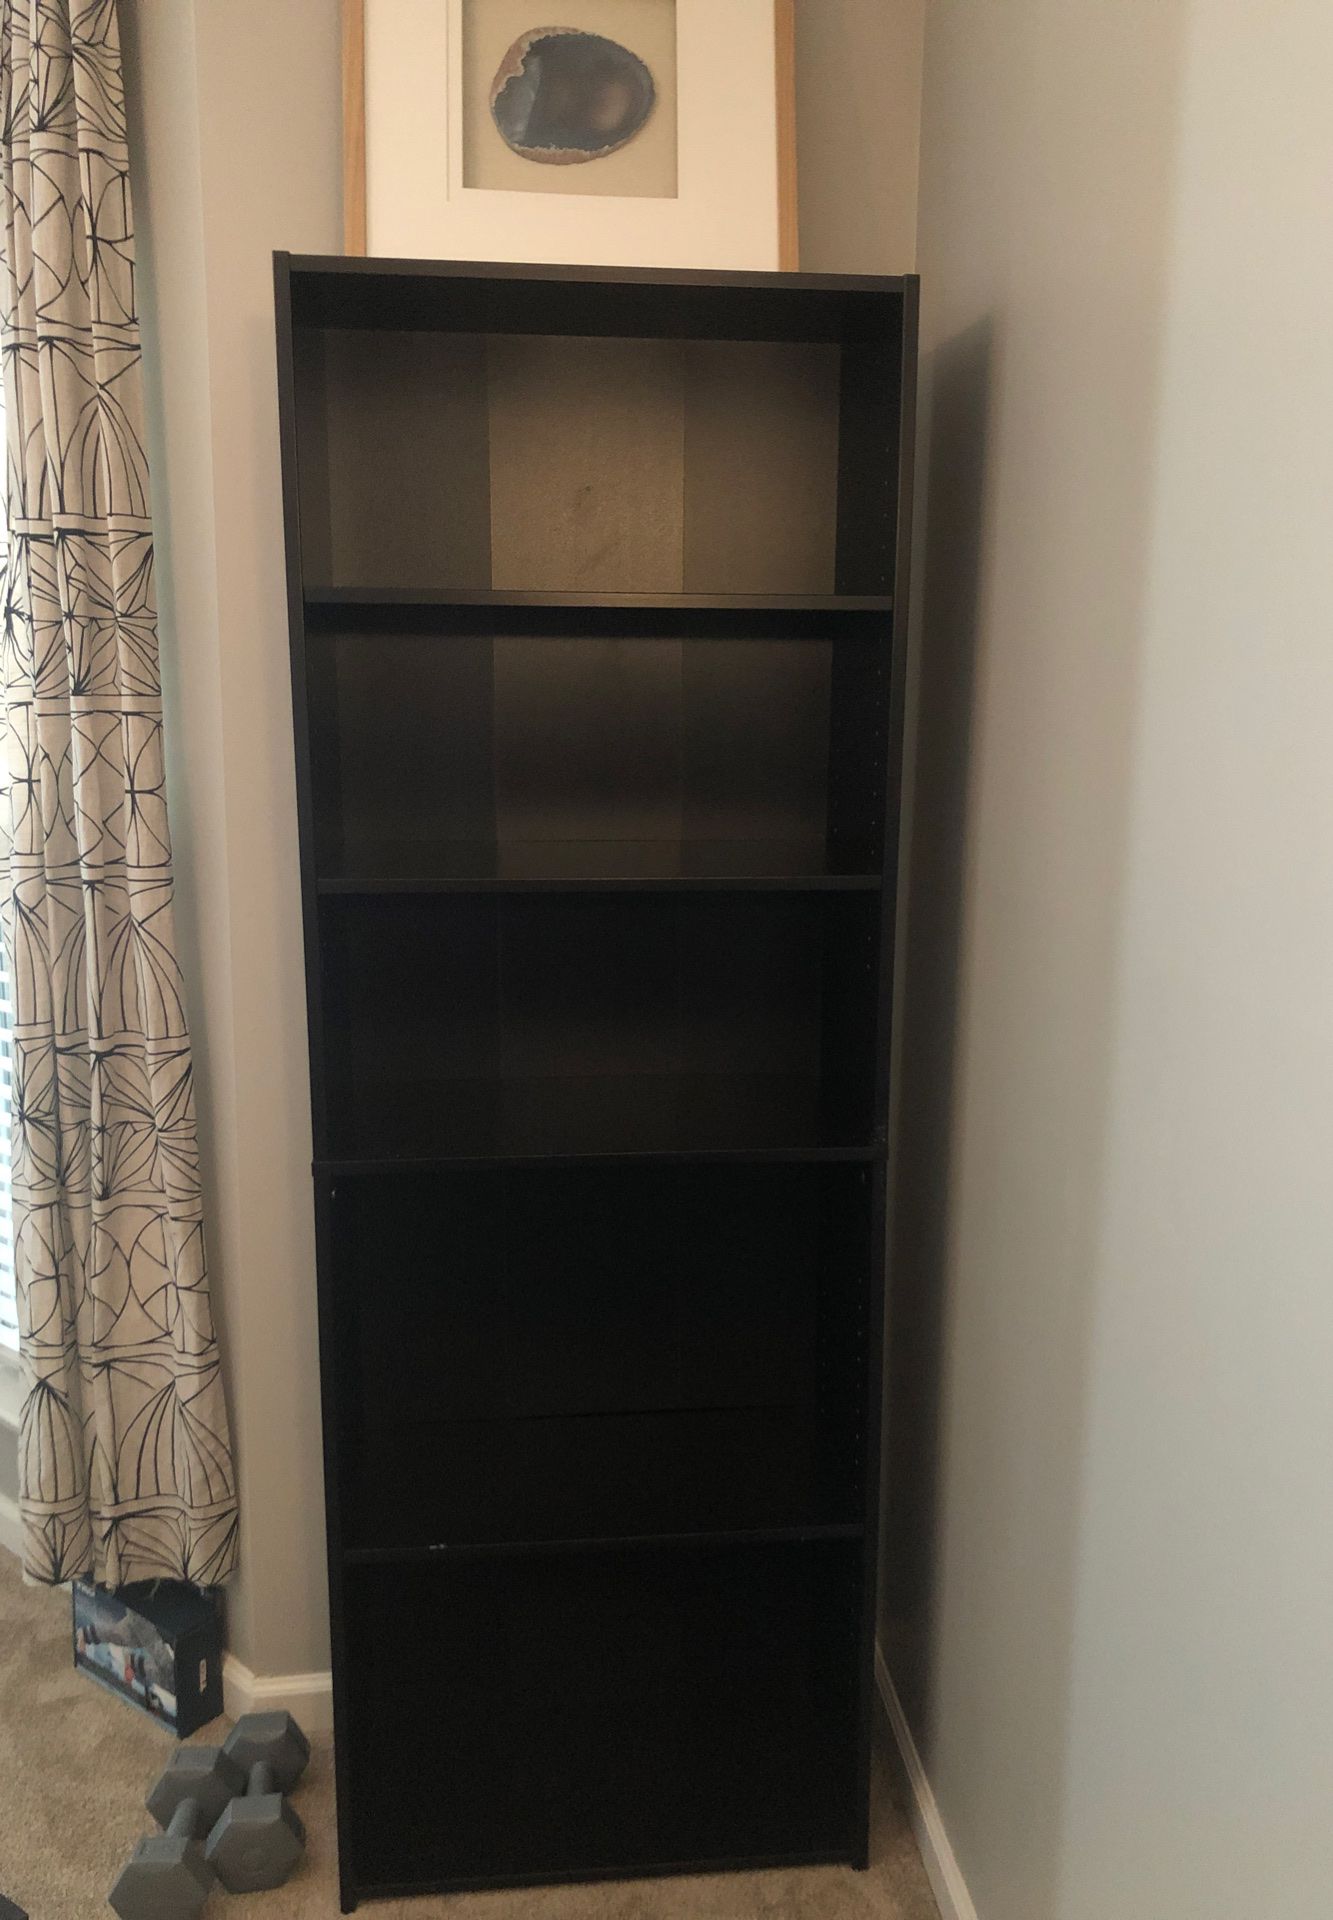 Two dark brown wooden bookshelves five adjustable shelves